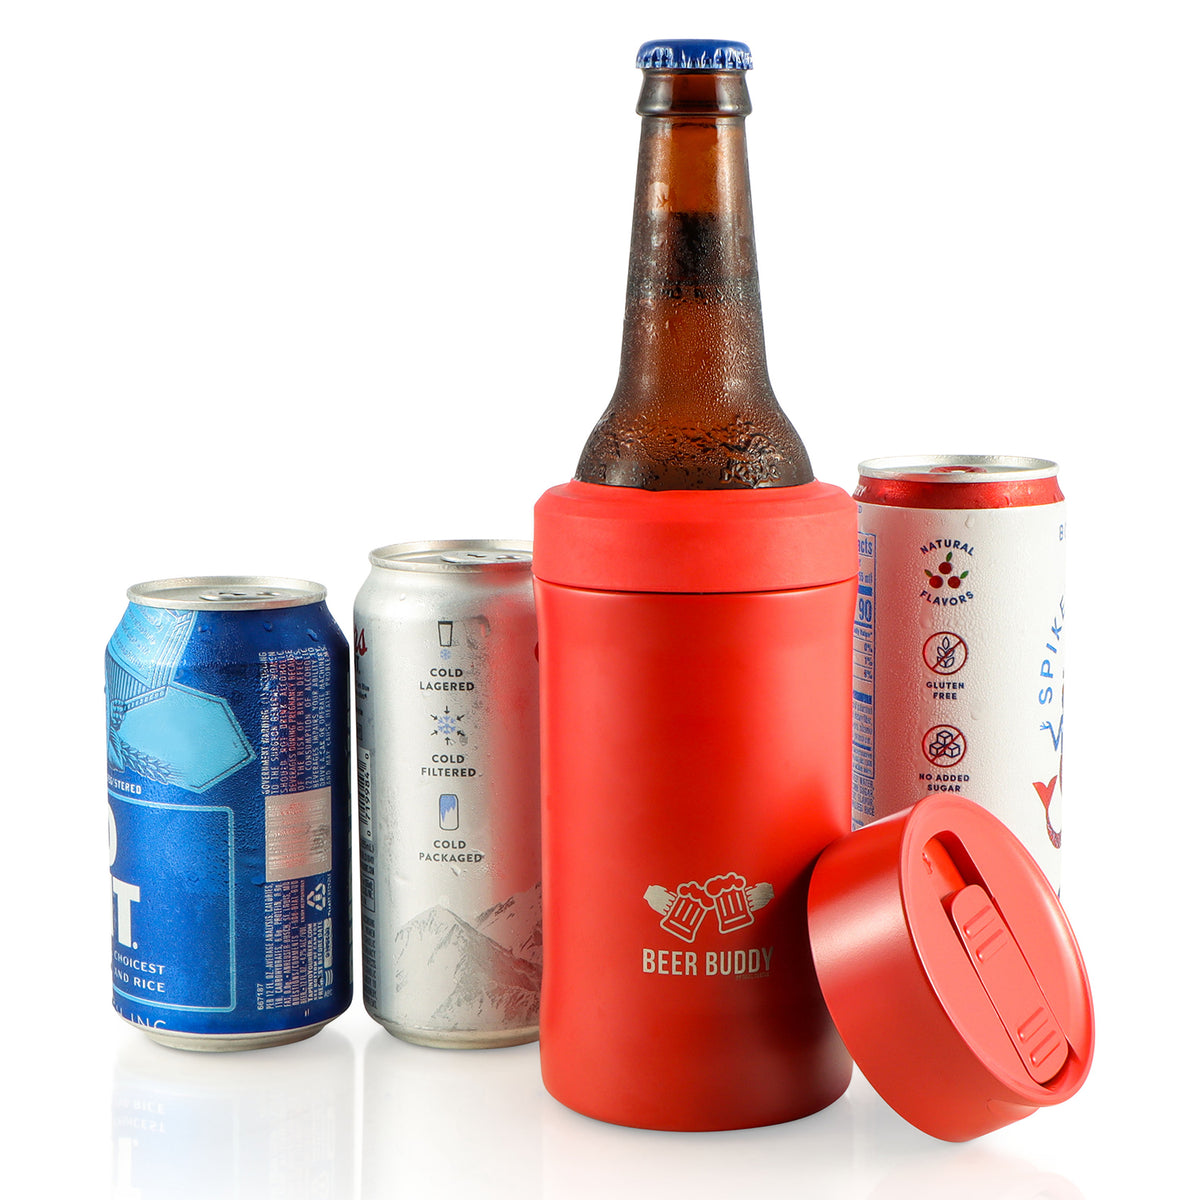 Beverage Buddy - Wacky Inventions, surf rod & beer holder m…